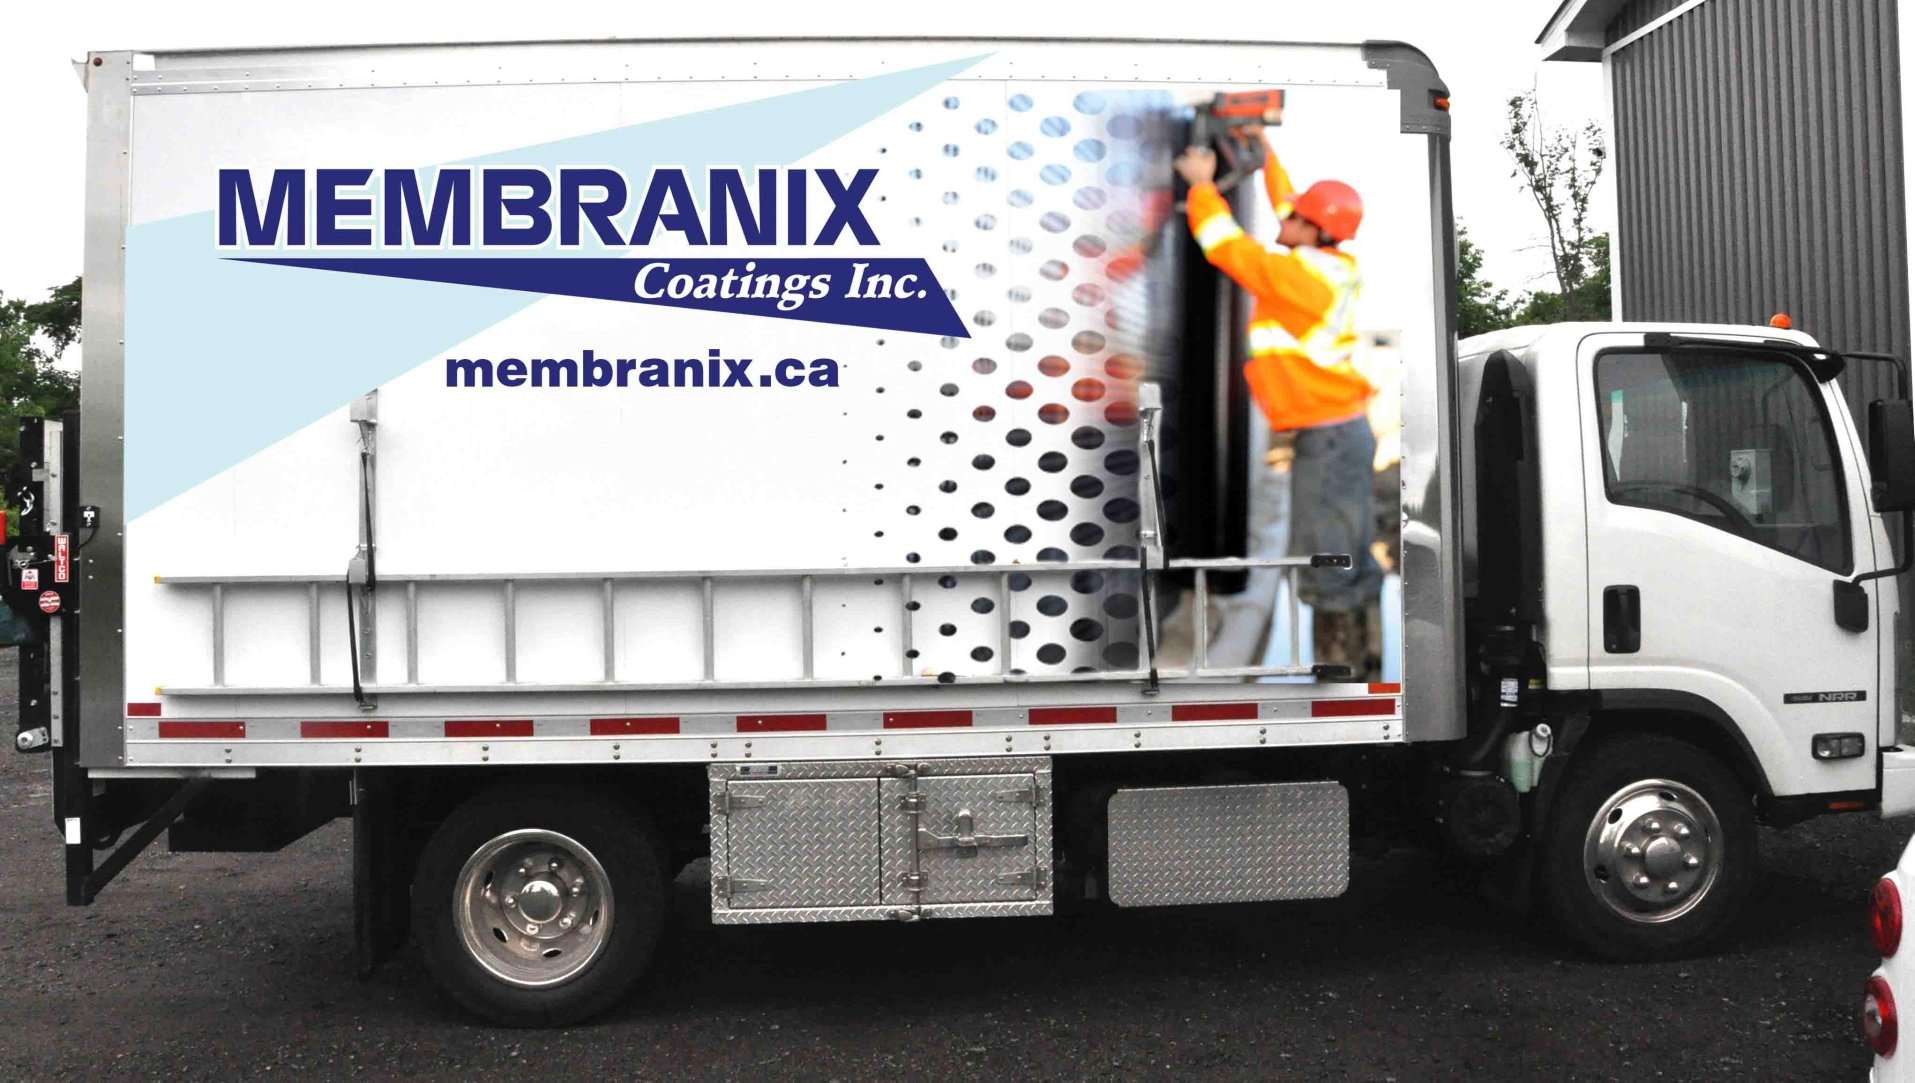 membranix-truck